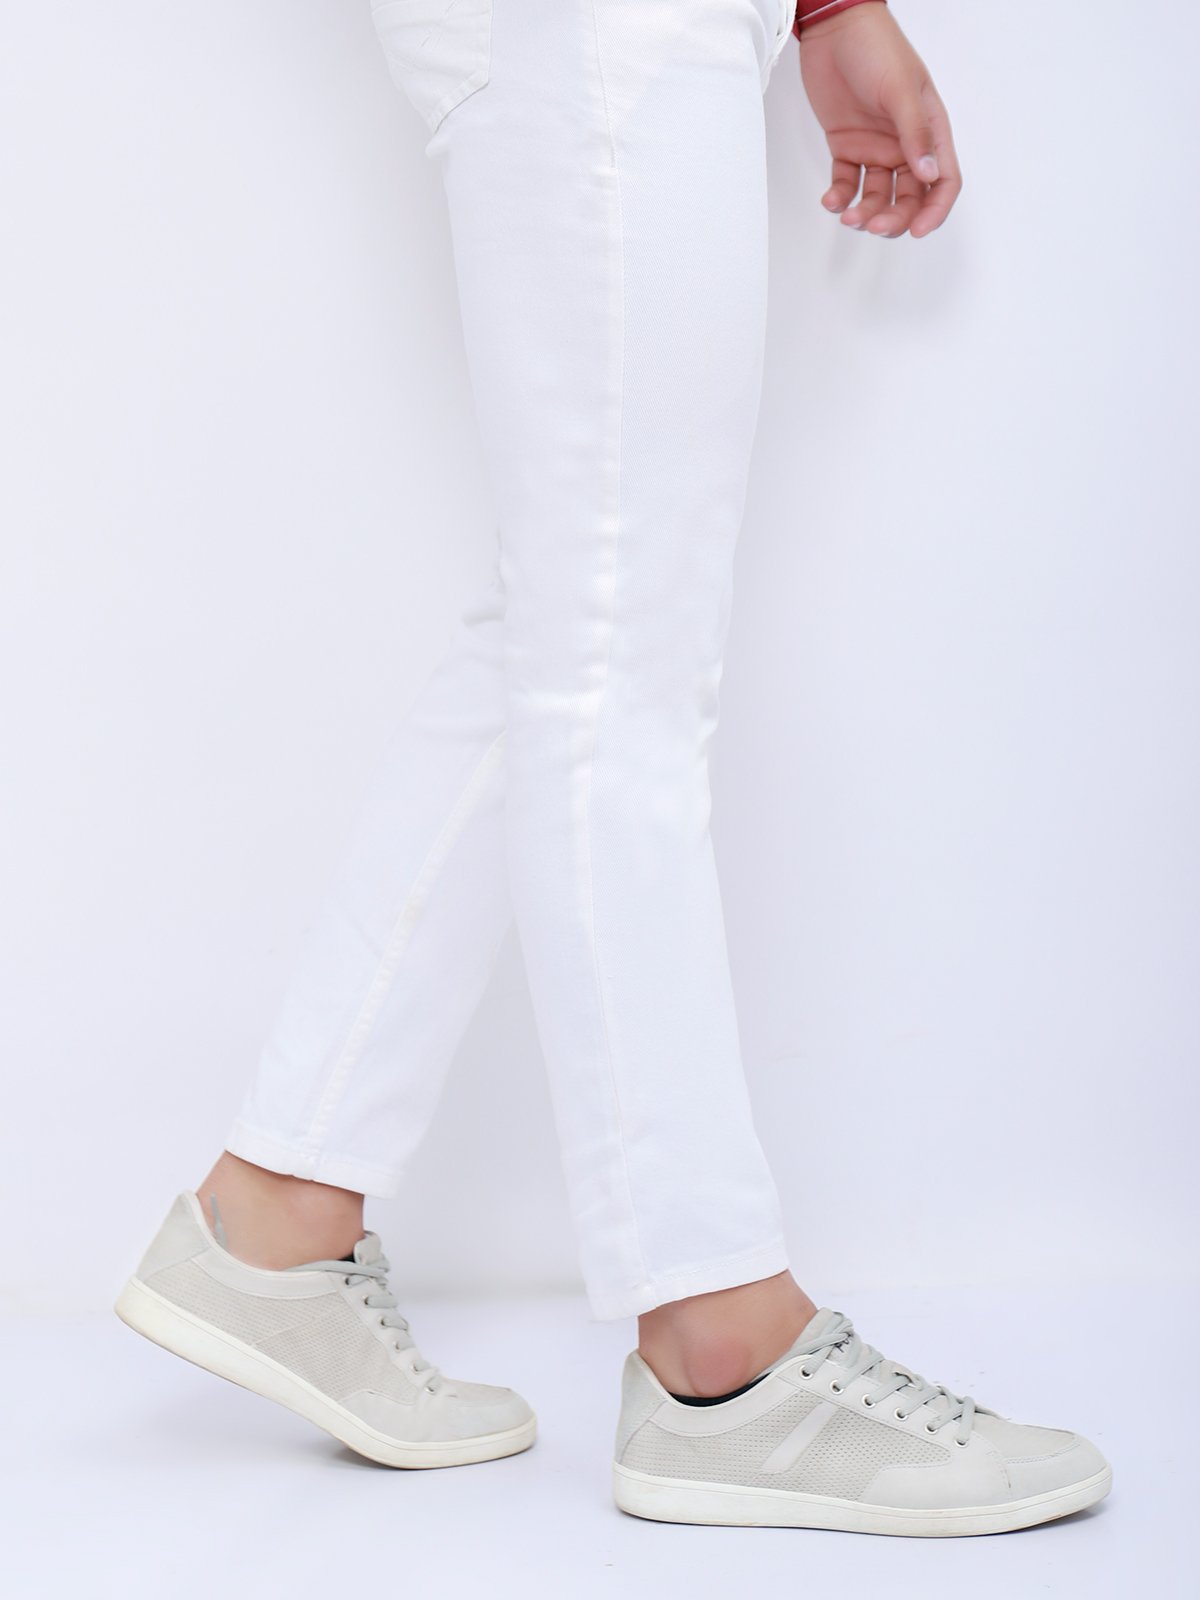 Men's White Denim Jeans - FMBP20-015